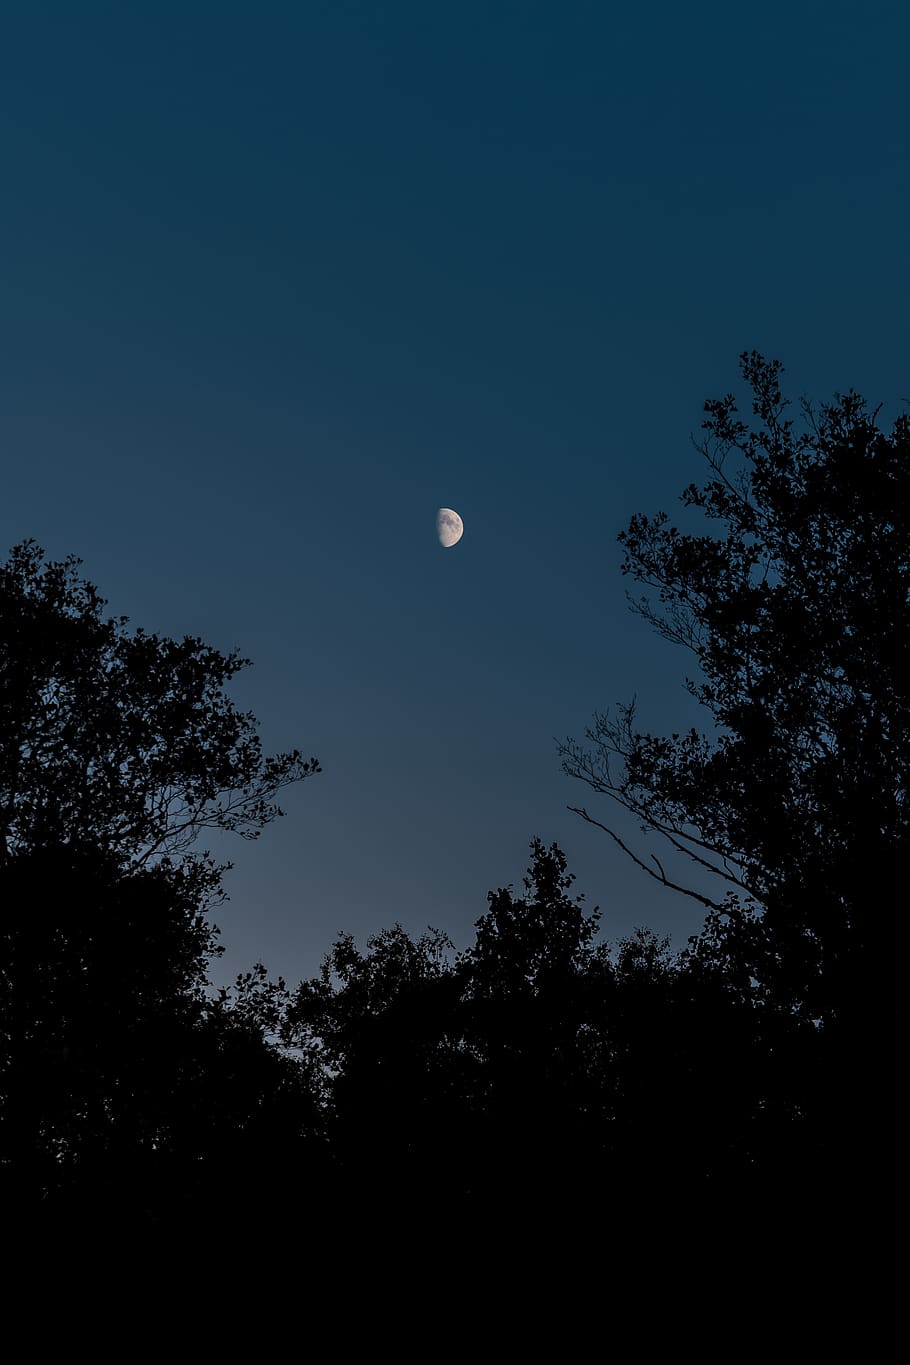 sweden, stockholm archipelago, tree, sky, plant, moon, night